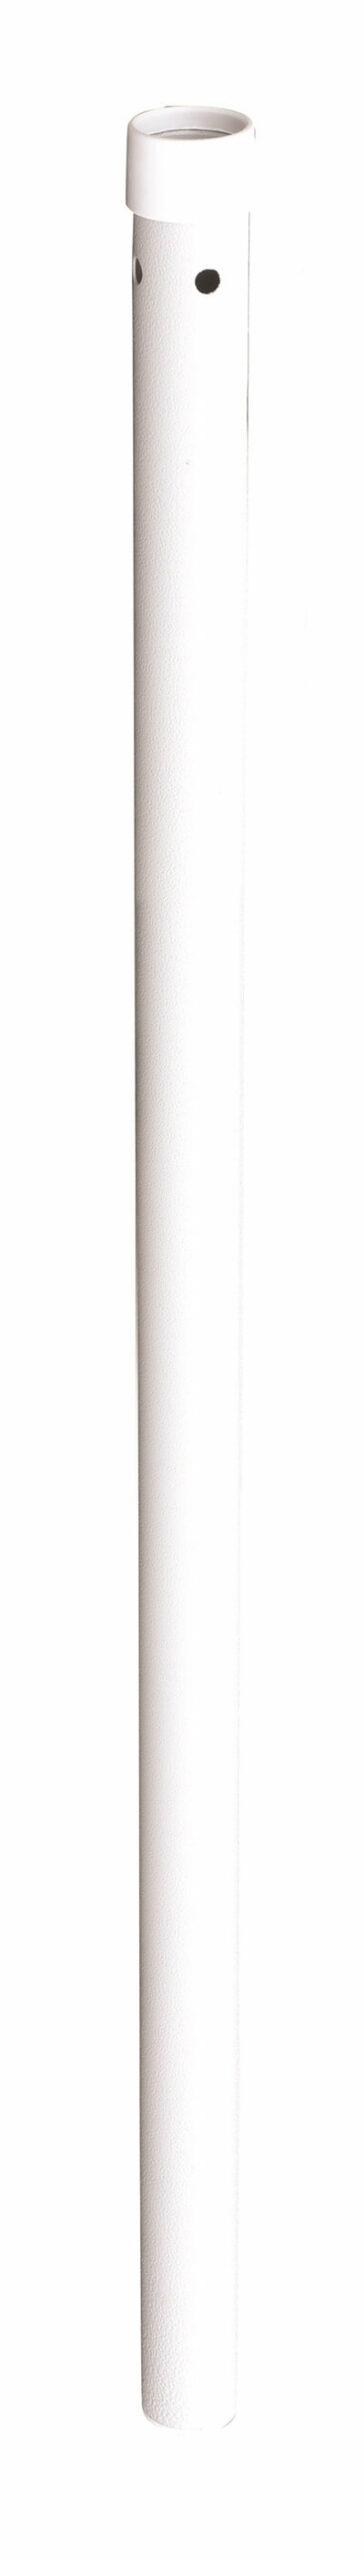 40 inch Umbrella Extension Poles in White